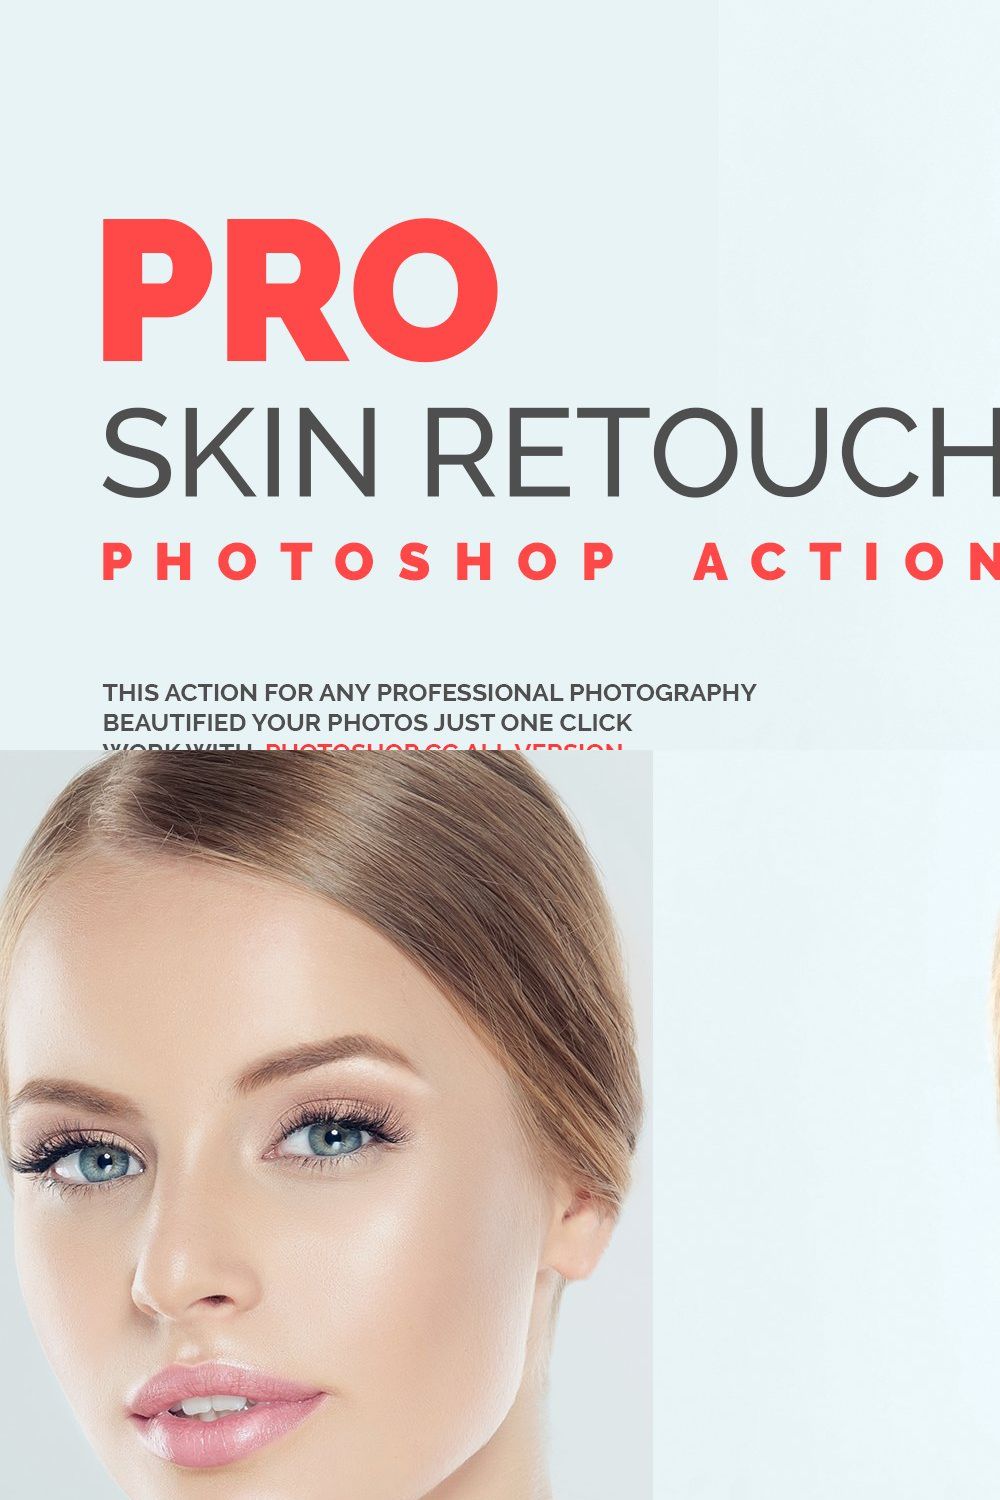 PRO Skin Retouch Photoshop Action pinterest preview image.